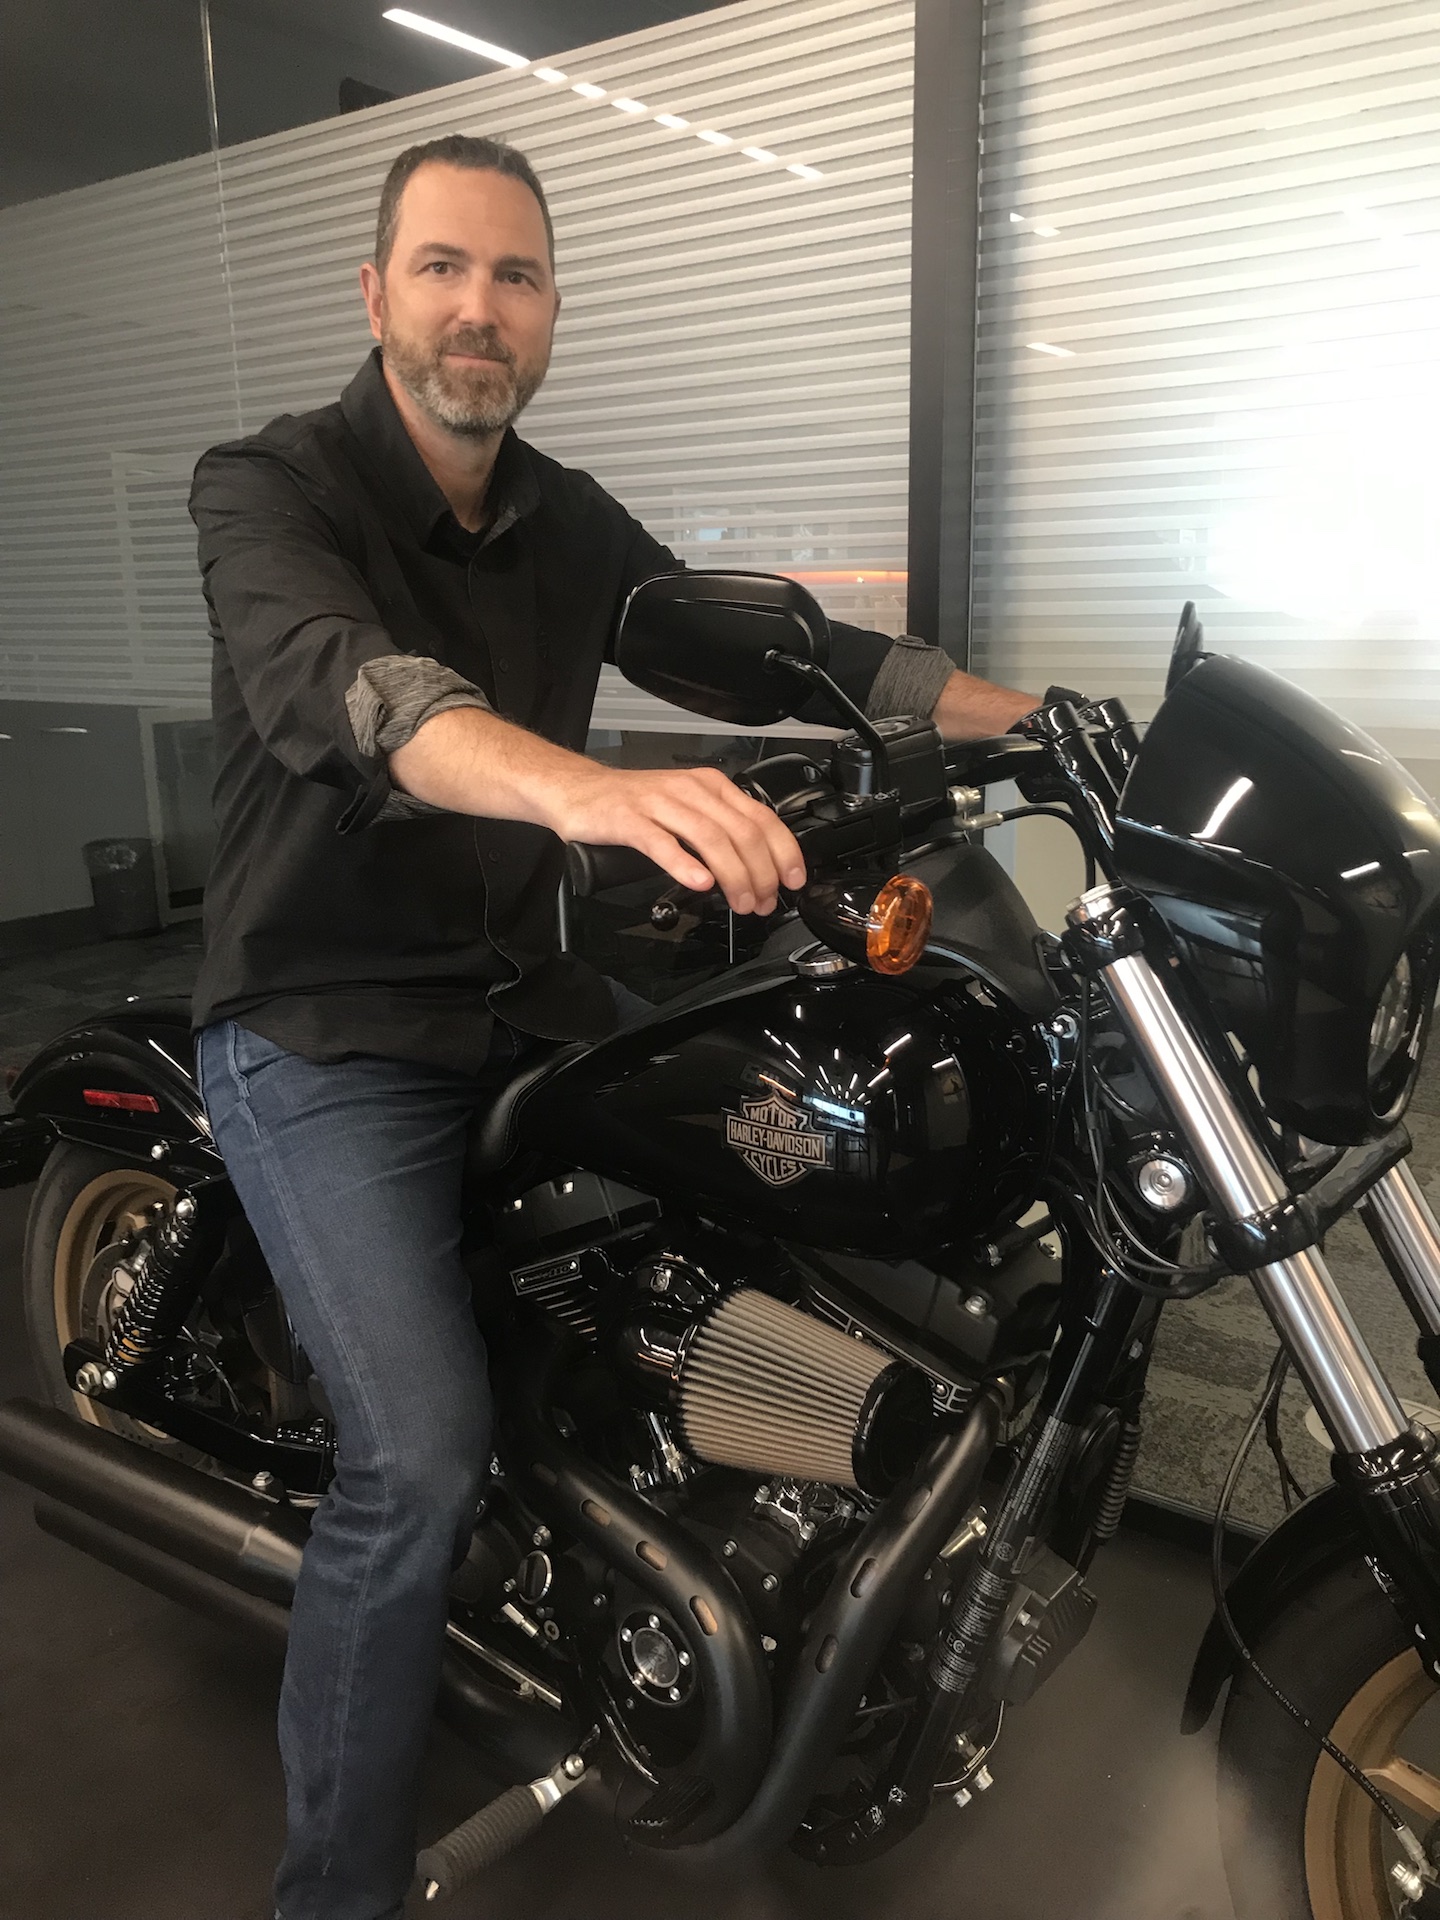 Harley Davidson Canada Managing Director Scott Winhold